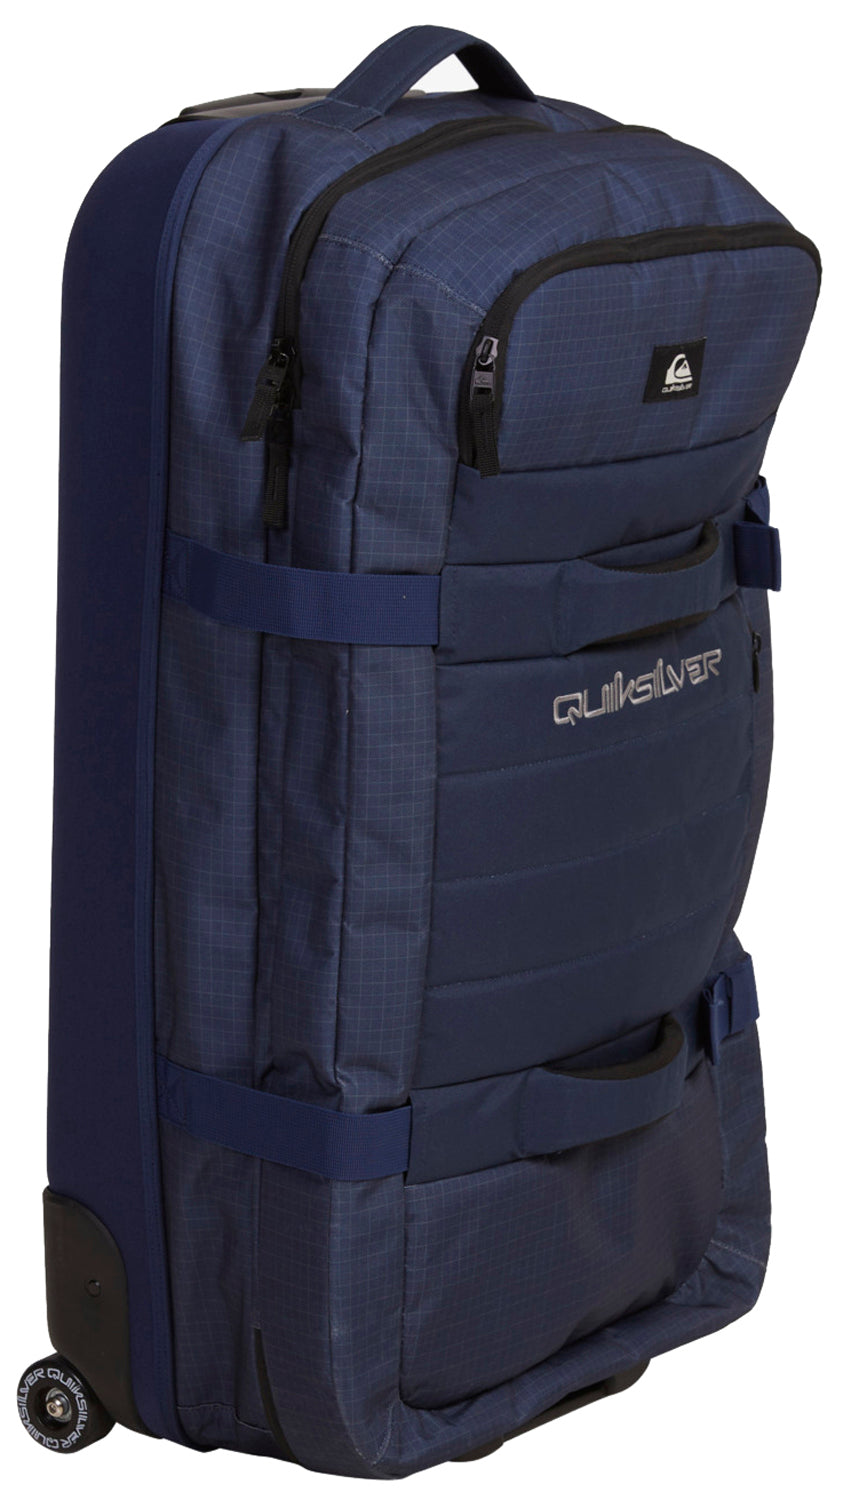 Quiksilver New Reach 100L Suitcase - Naval Academy